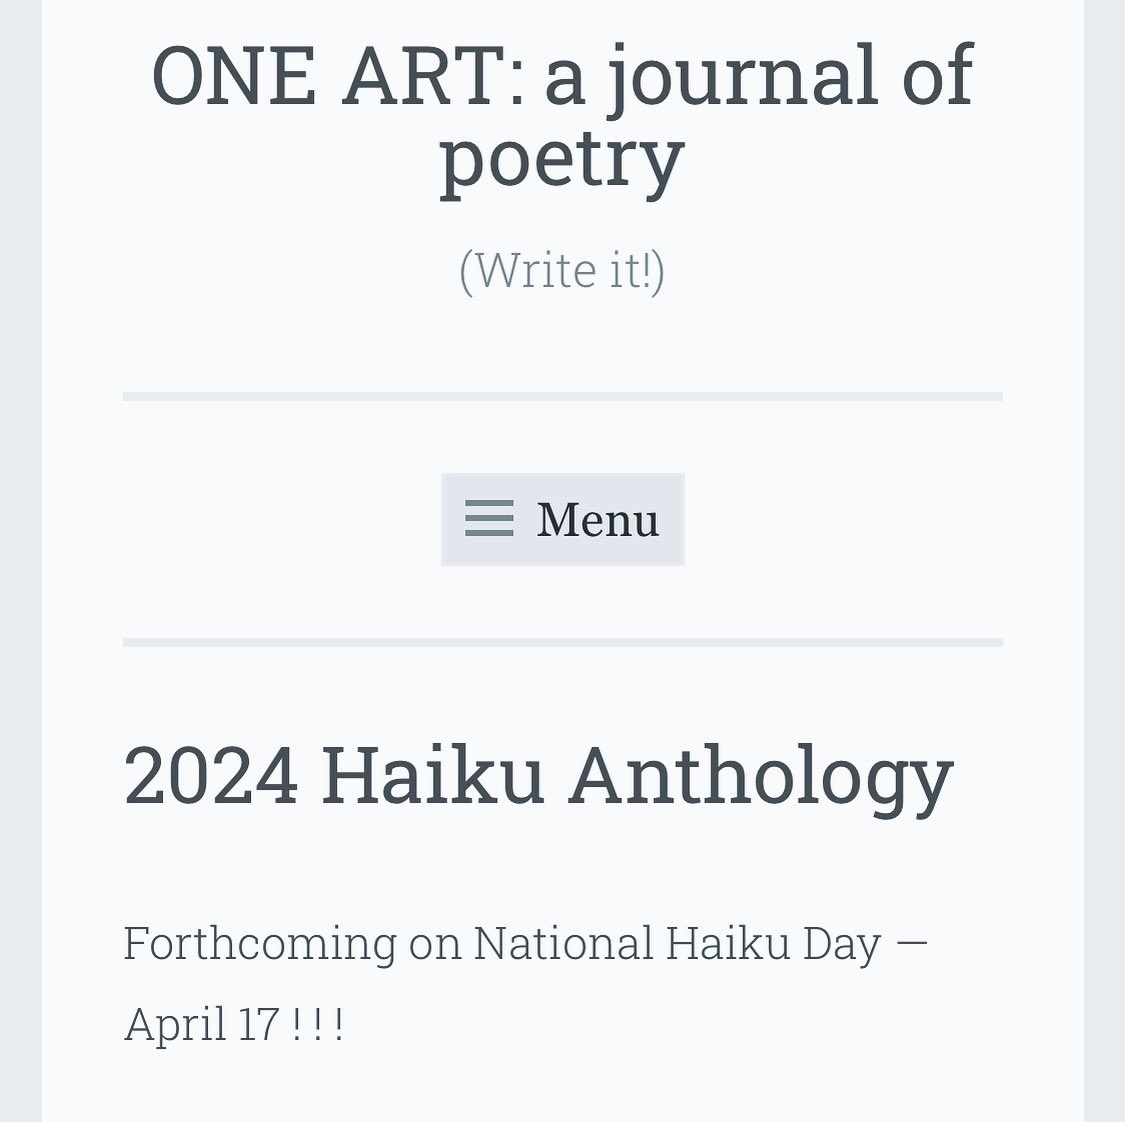 The ONE ART Haiku Anthology drops in 2 days — April 17 — National Haiku Day

#haiku #NationalHaikuDay #poetry #poetrycommunity